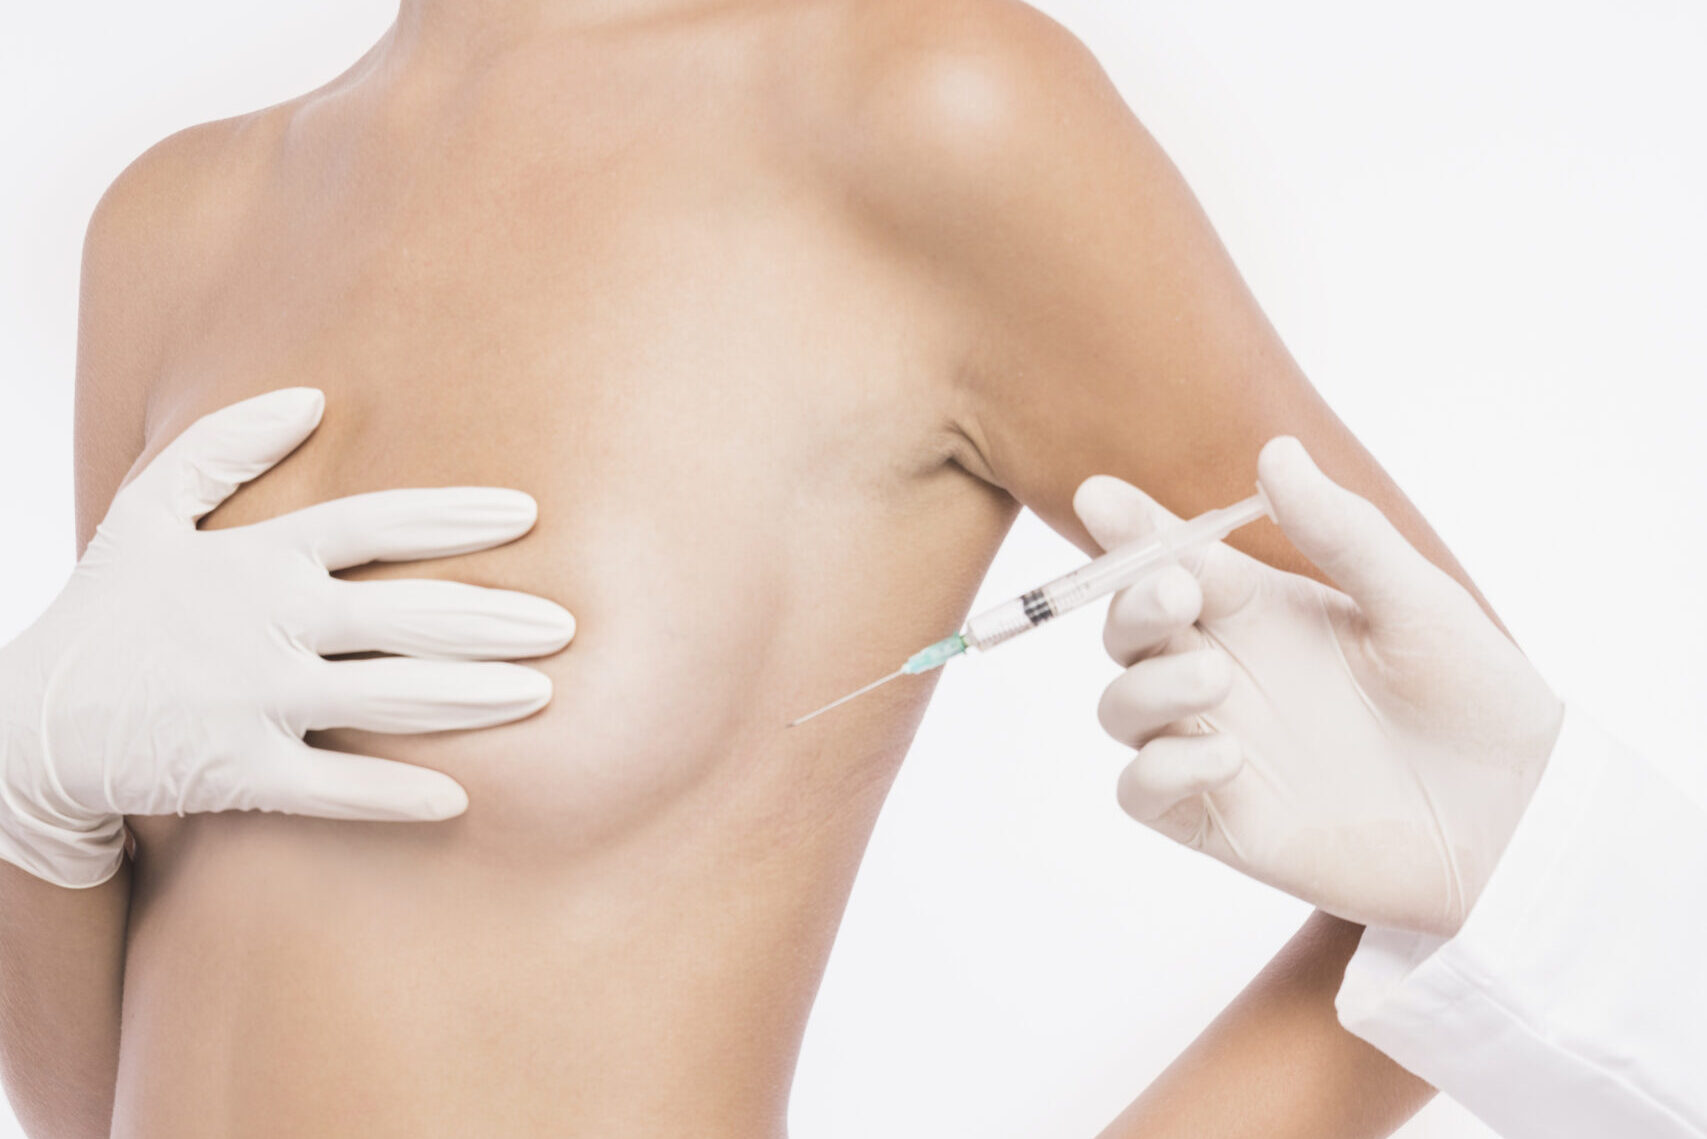 plastic-surgeon-injecting-woman-breast